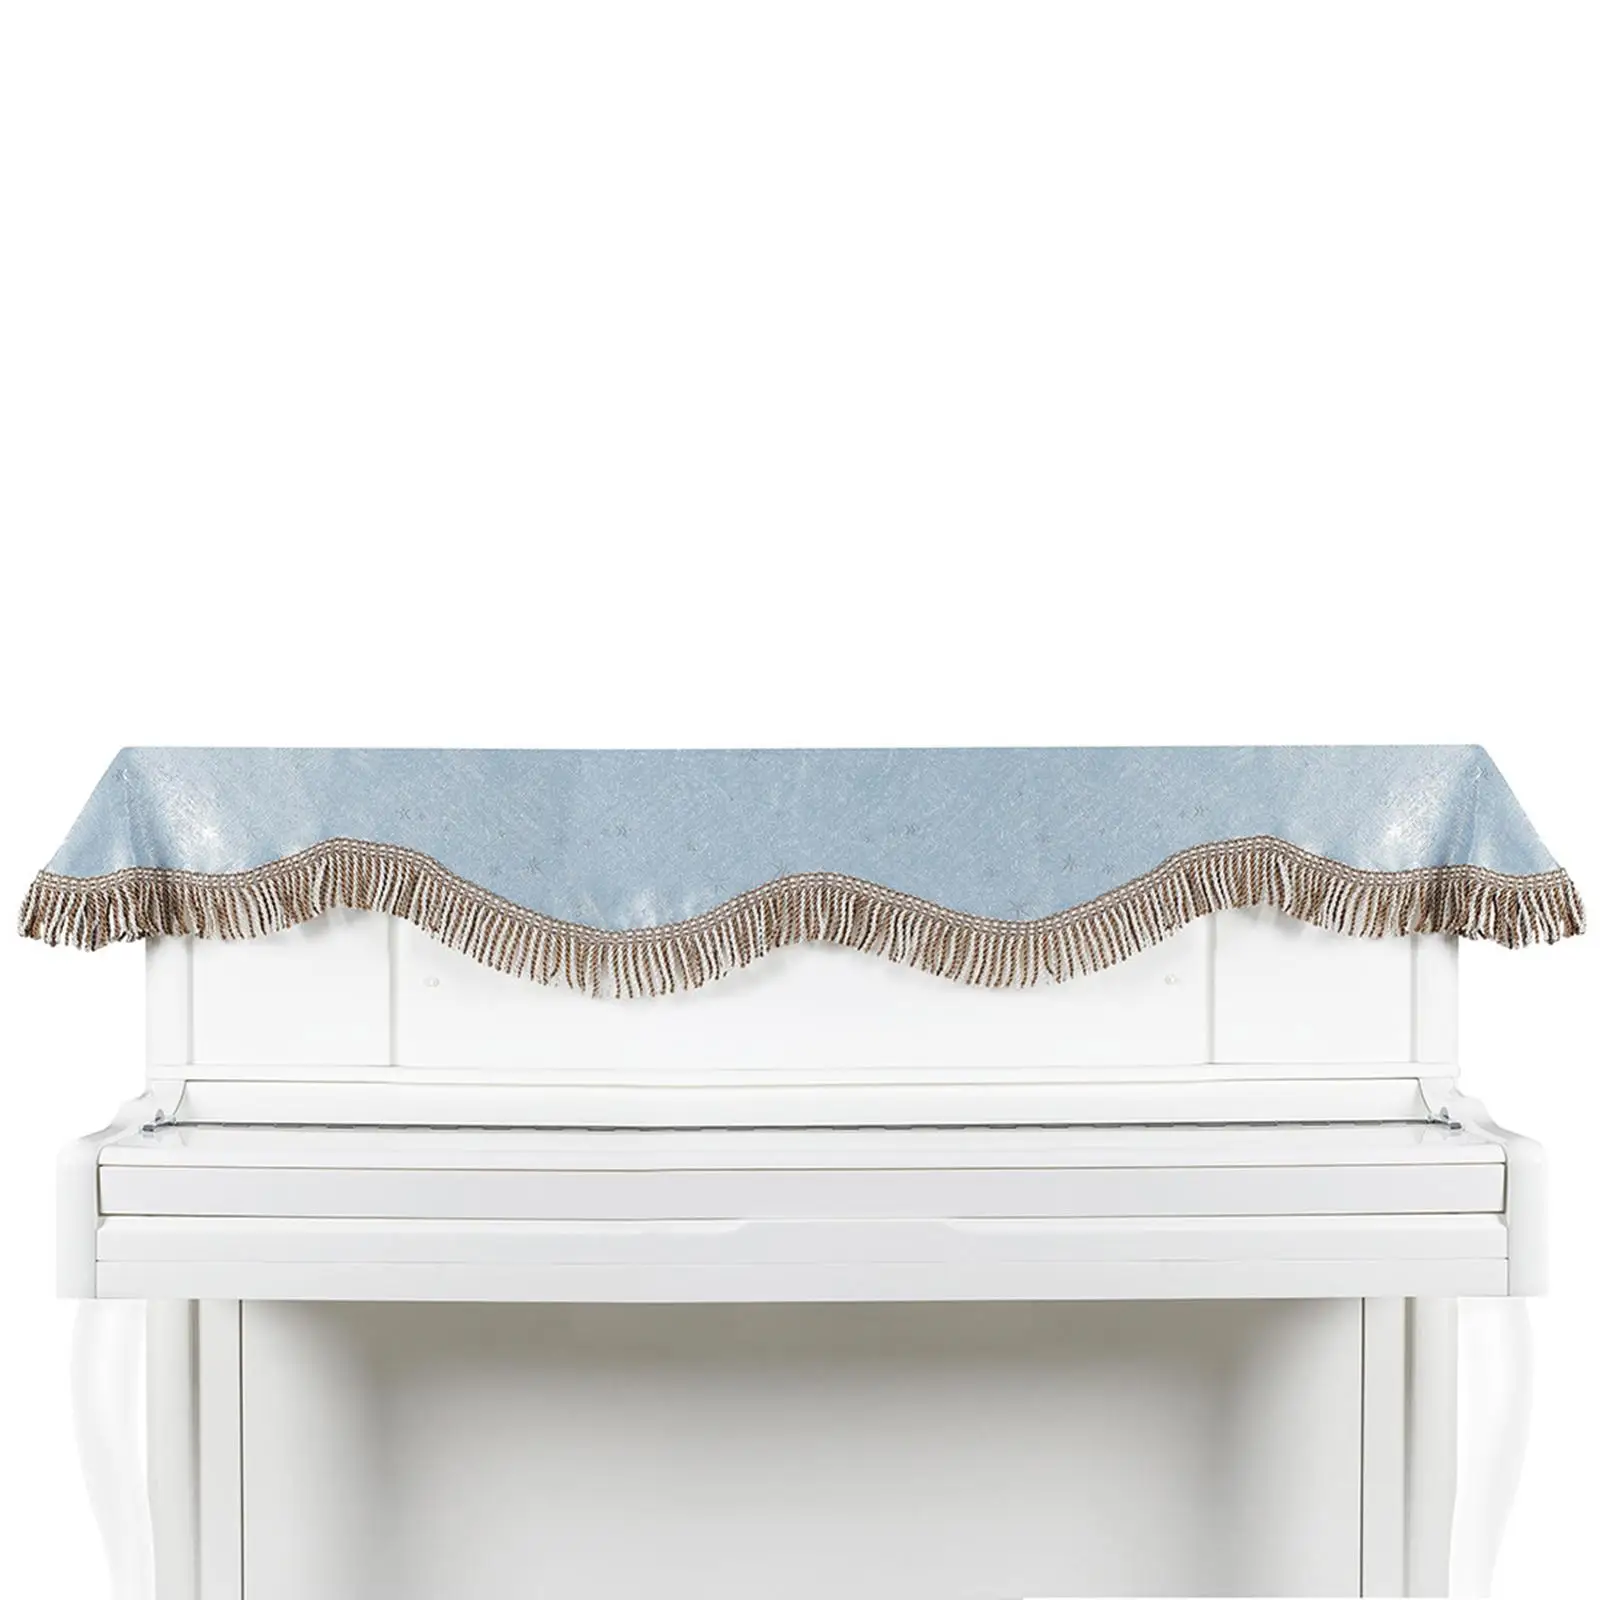 Universal Piano Half Cover Decoration Tassel Elegant Protective Dust Covers